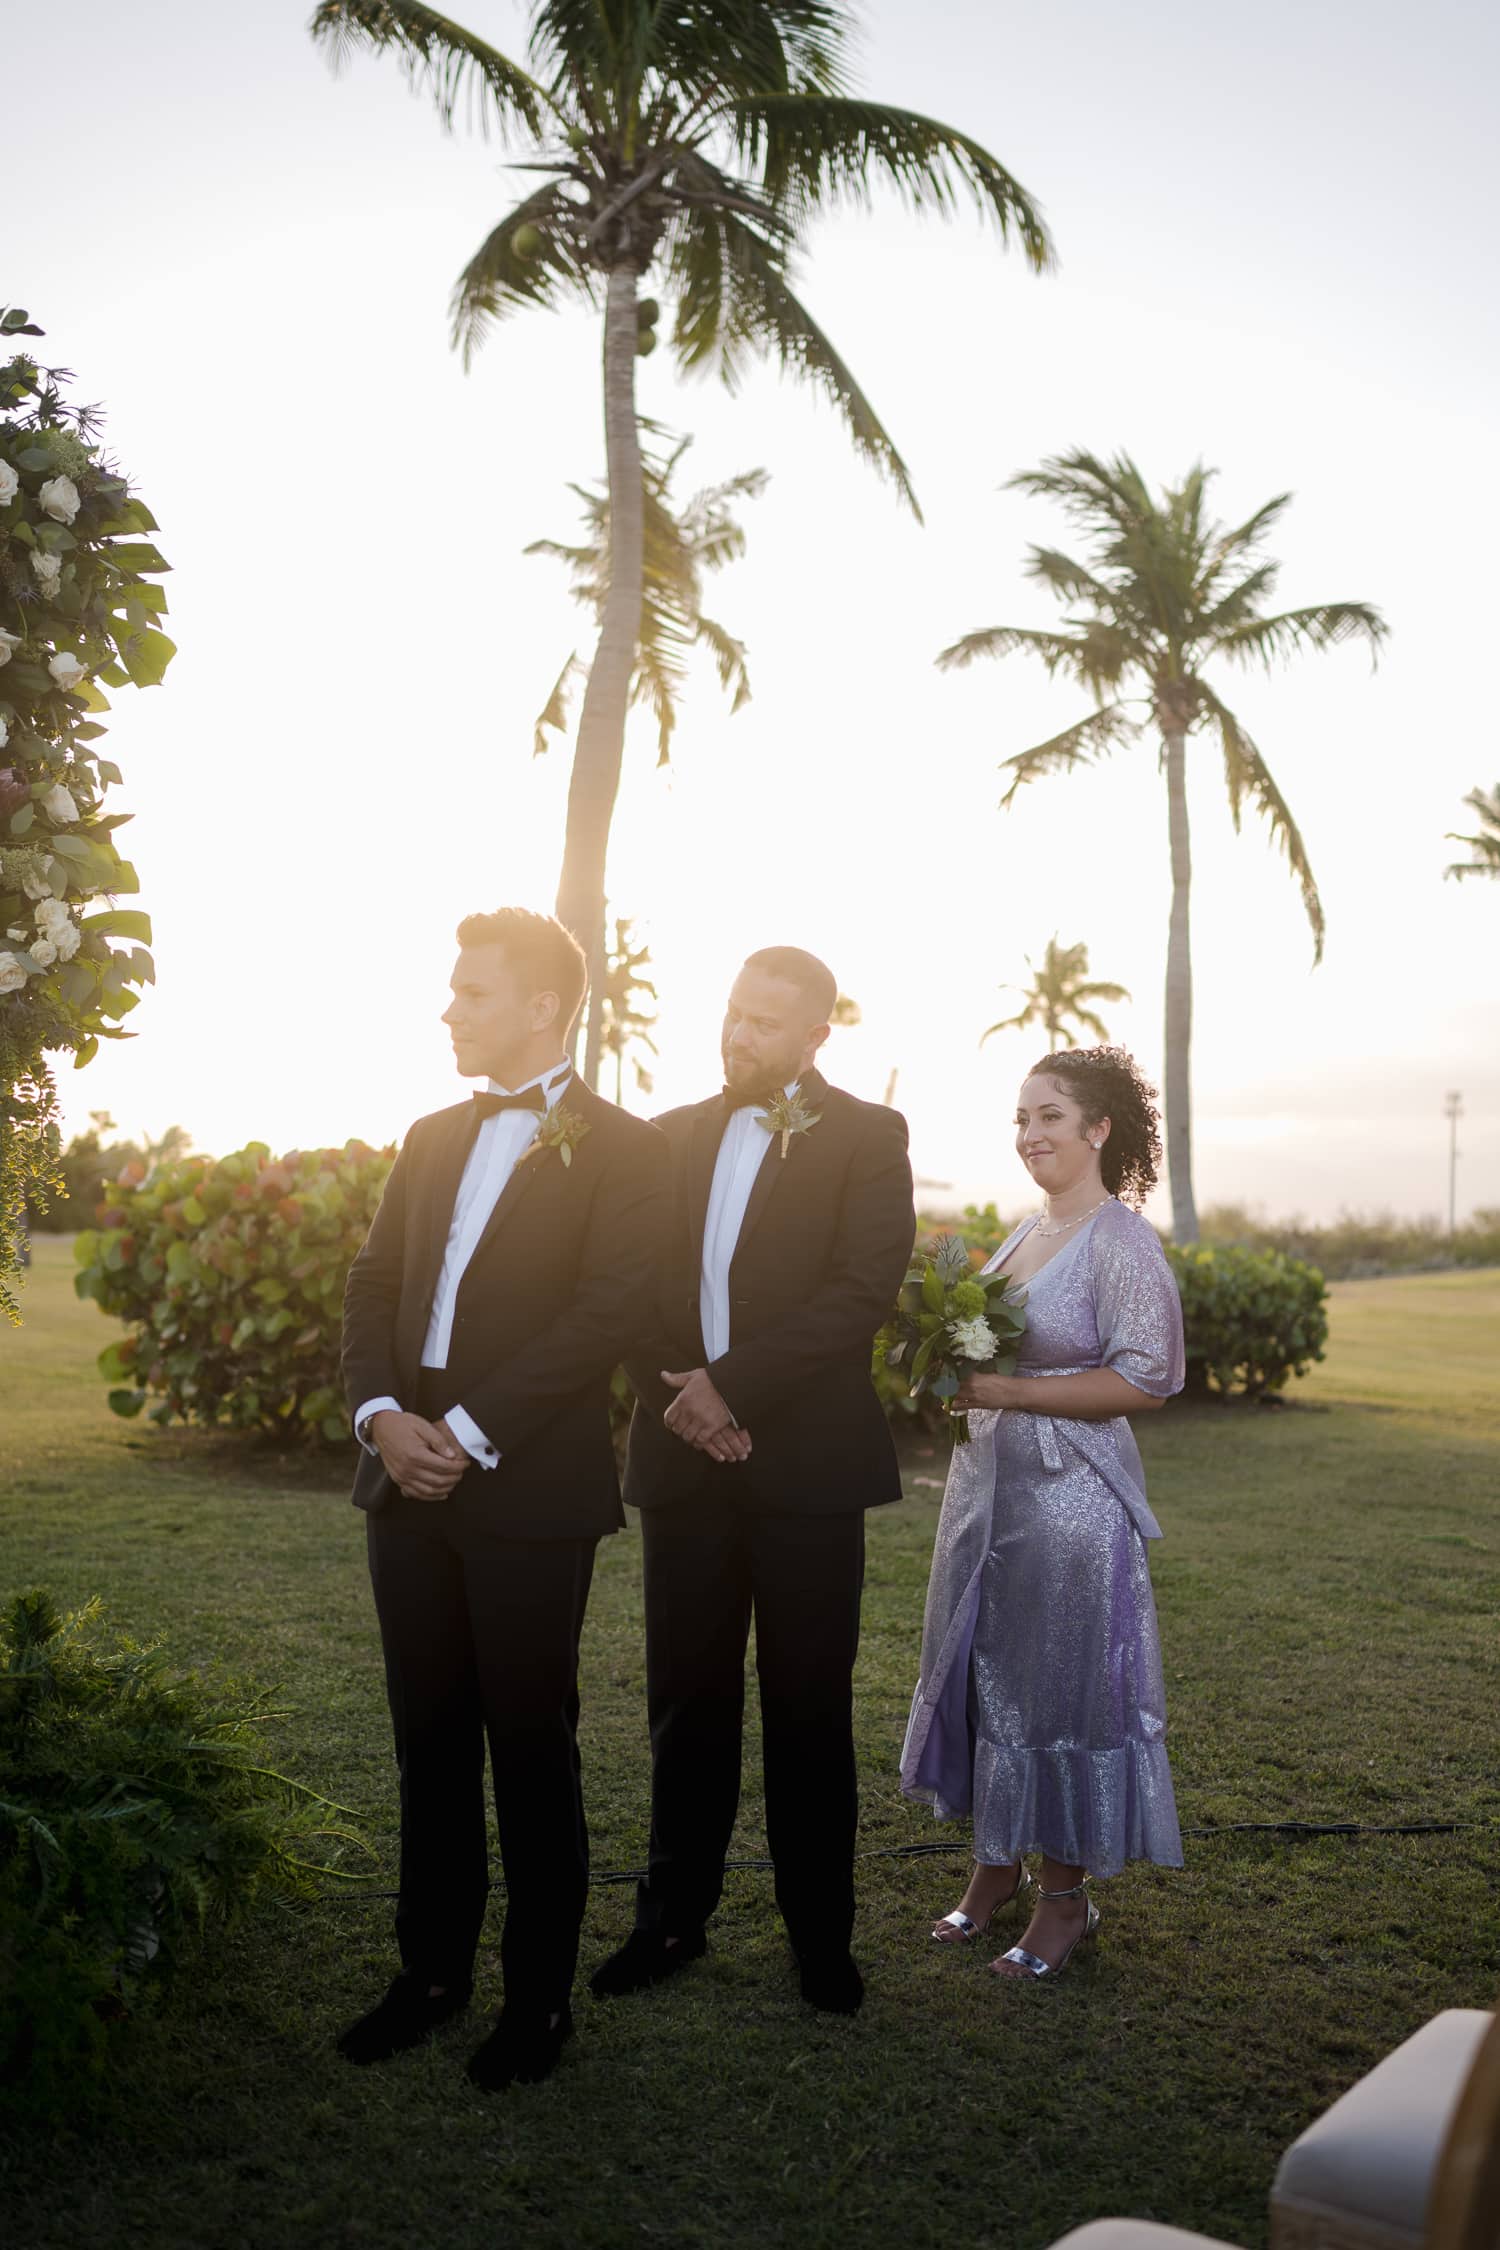 hilton ponce golf and casino wedding photography in puerto rico fotografia de boda